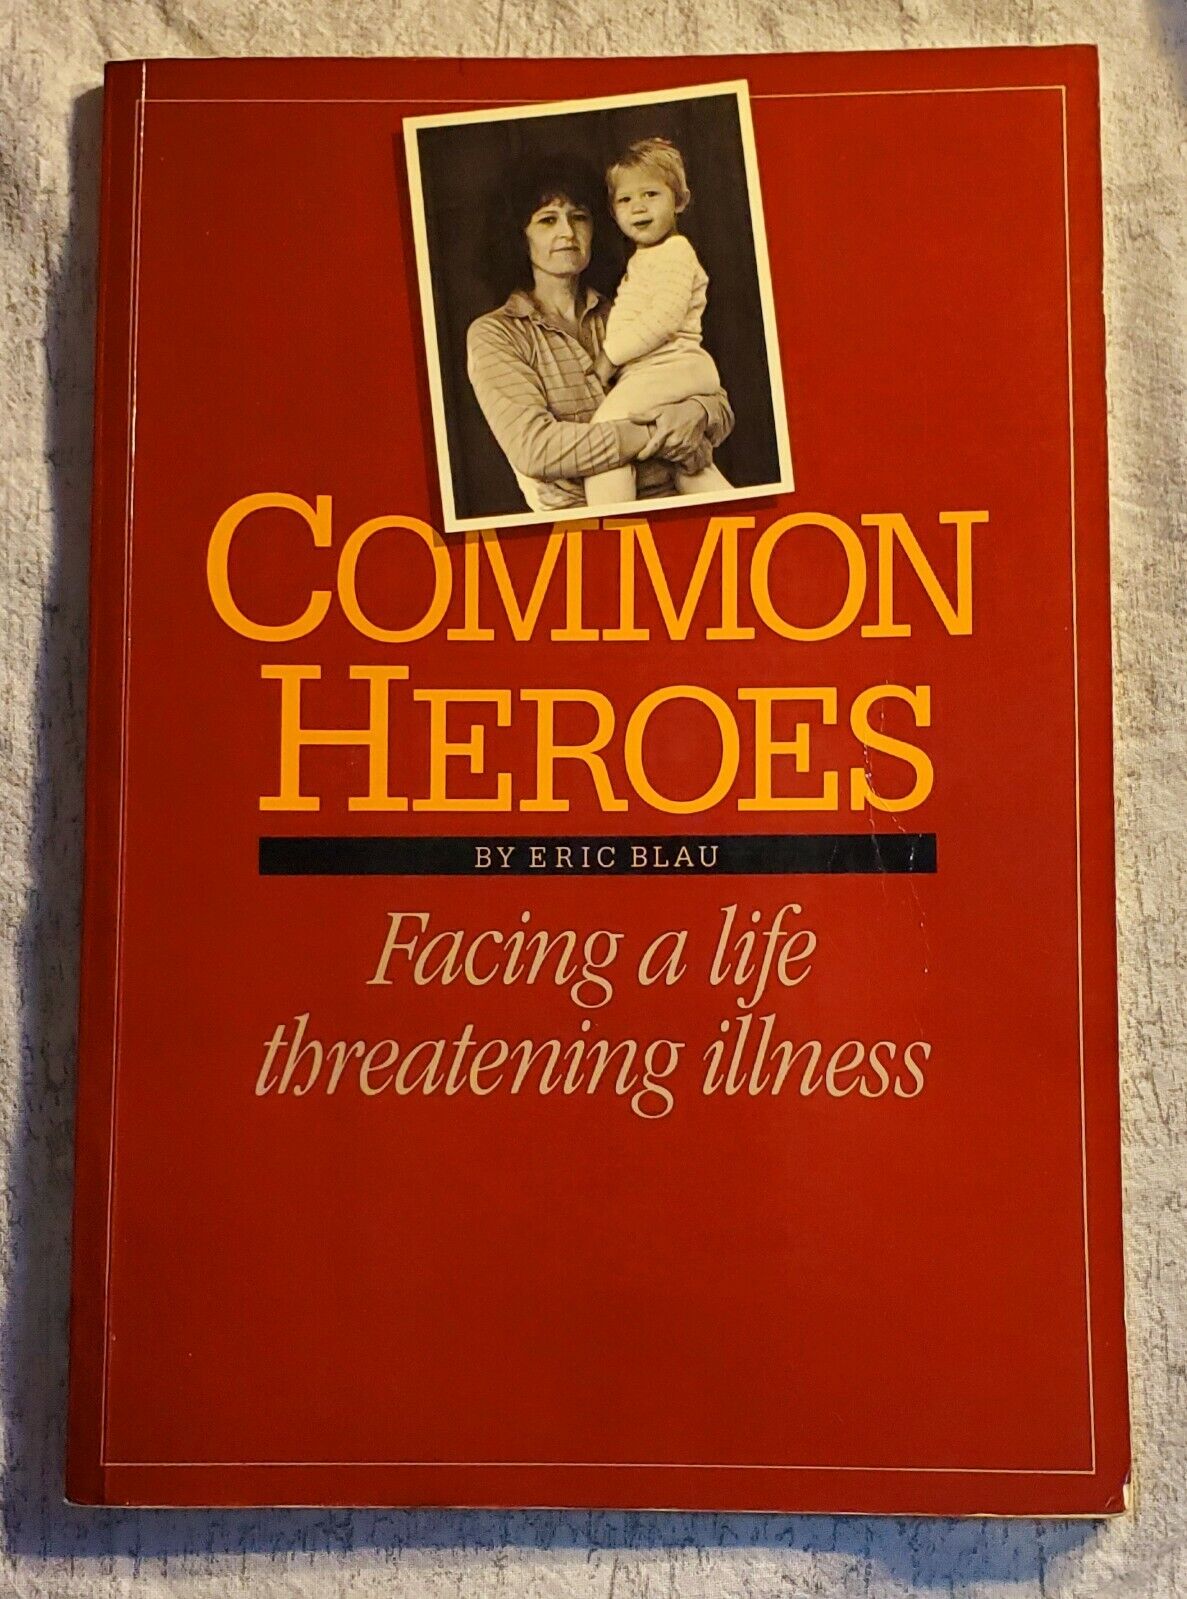 Common Heroes, Facing a Life Threatening Illness, Eric Blau, 1989, PB